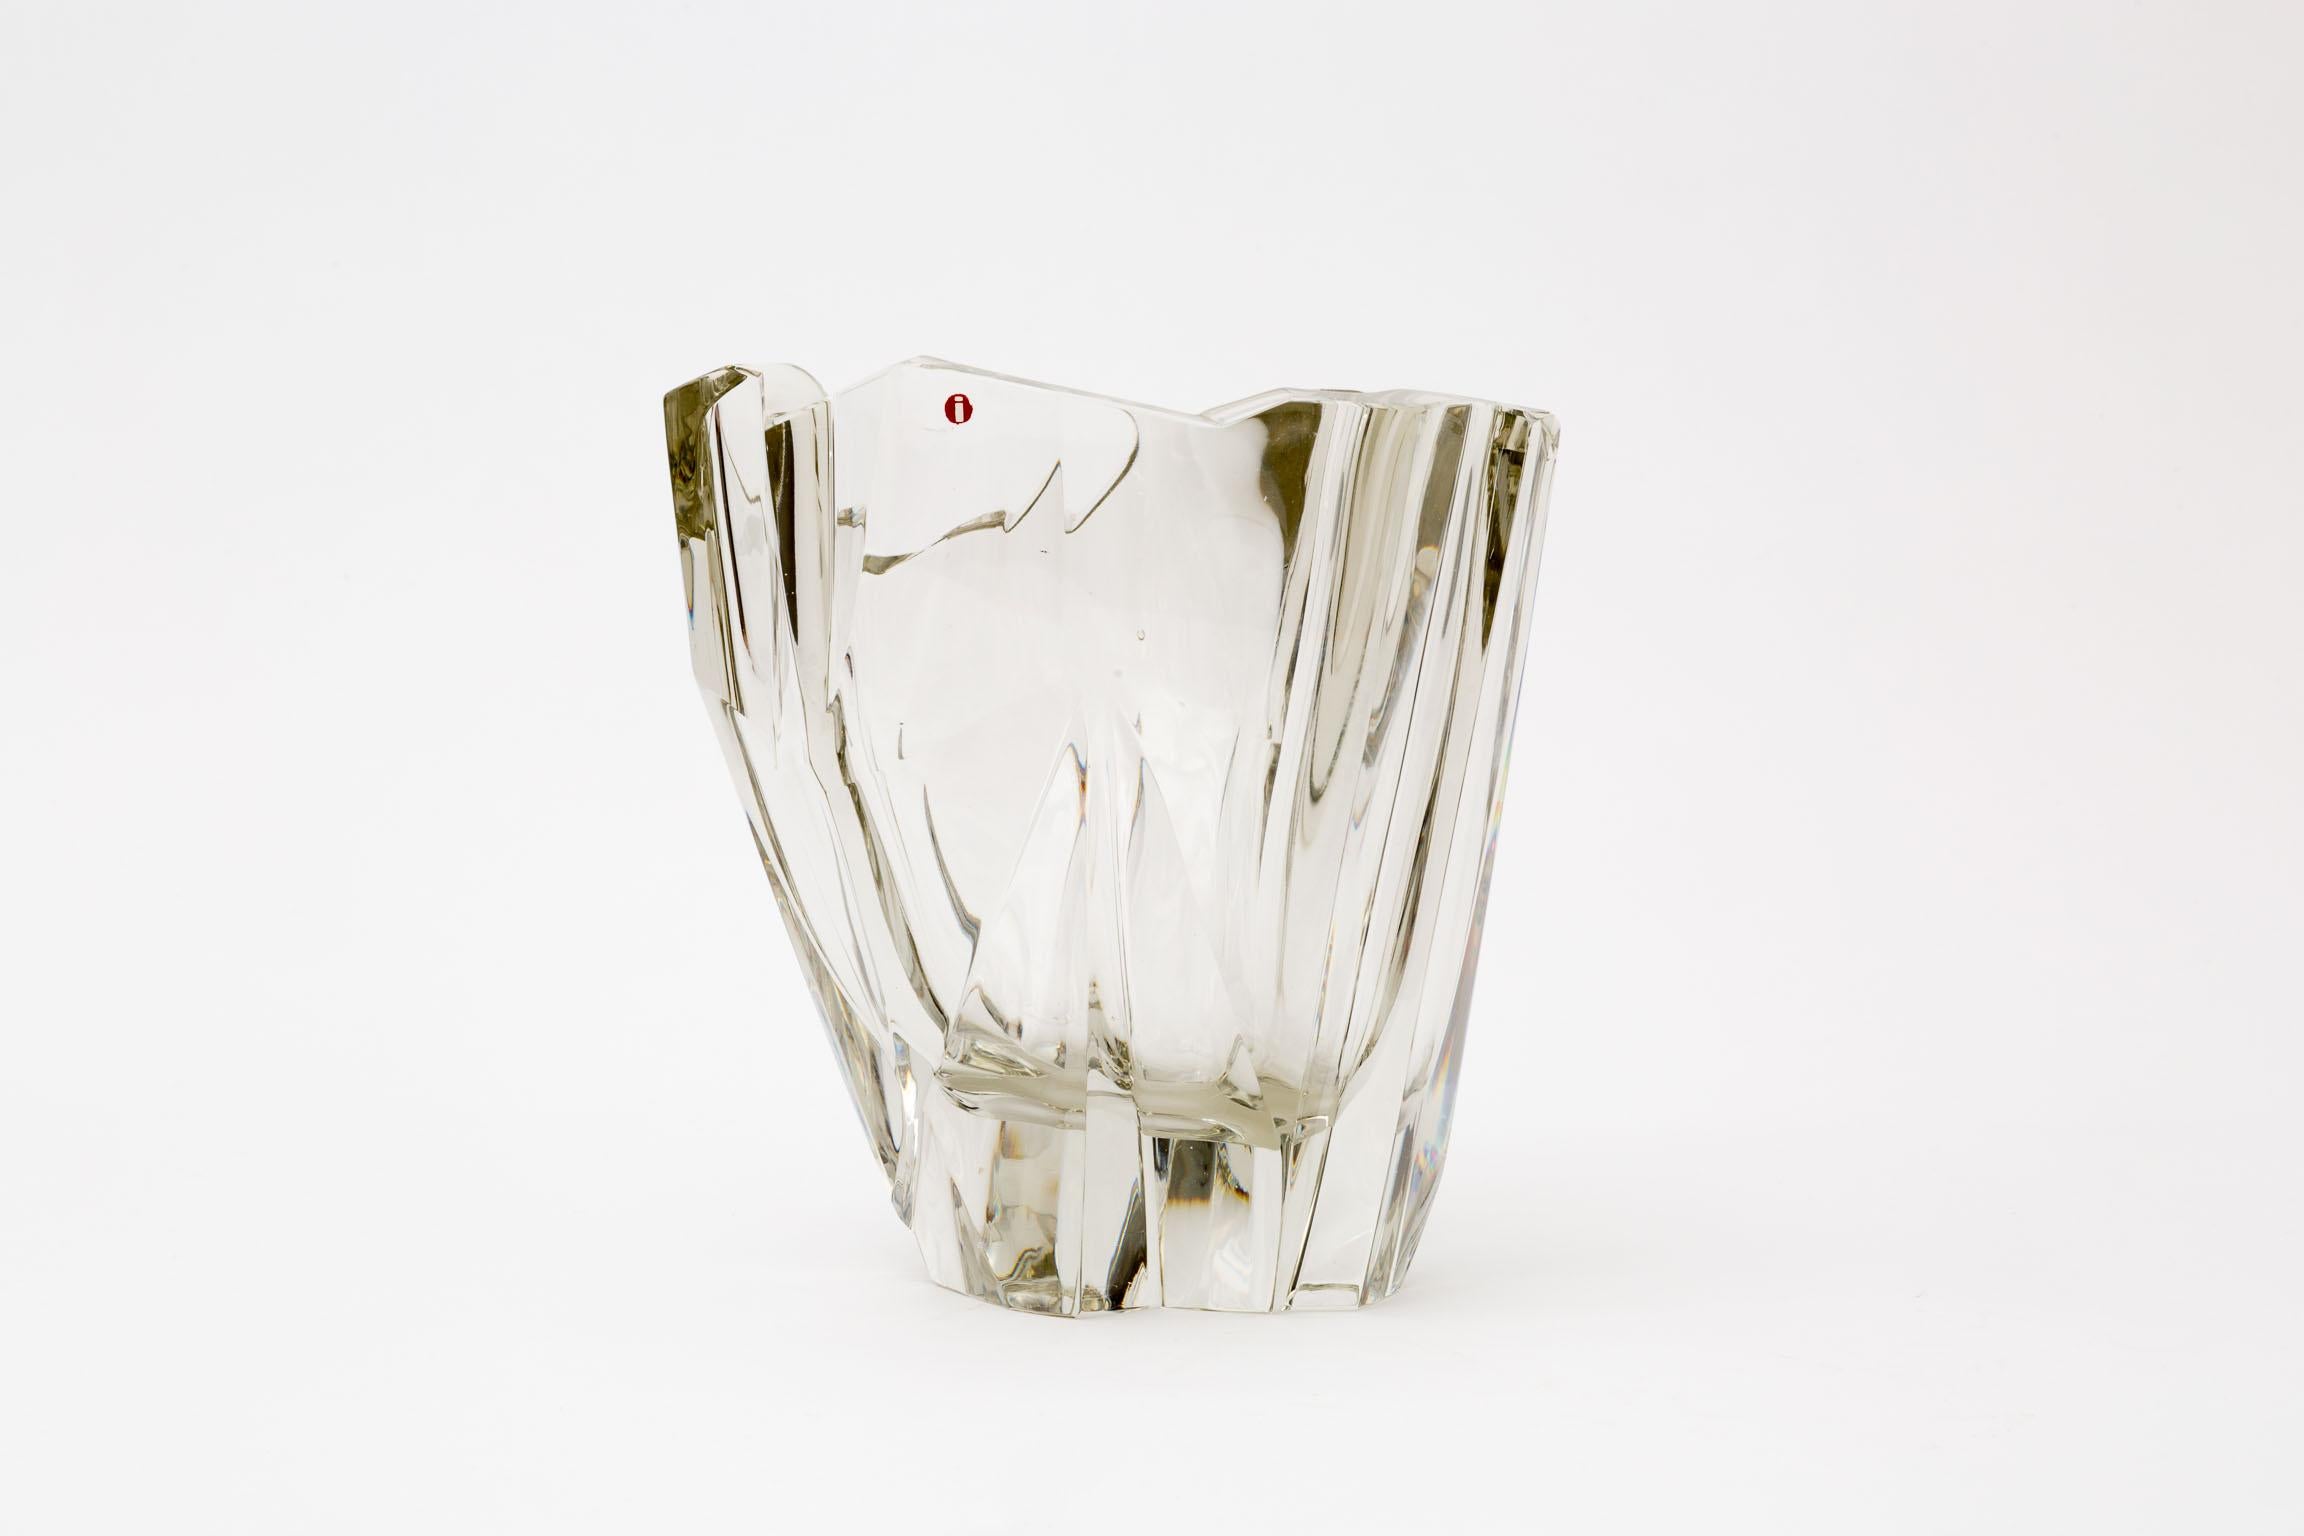 Crystal vase model 3825 “Iceberg” (original Finnish name “Jäävuori”) in production of Iittala Oy (Finland) 1951-1969, designed by Tapio Wirkkala, (1915-1985). Engraved signature in the bottom. Manufacturer's label.